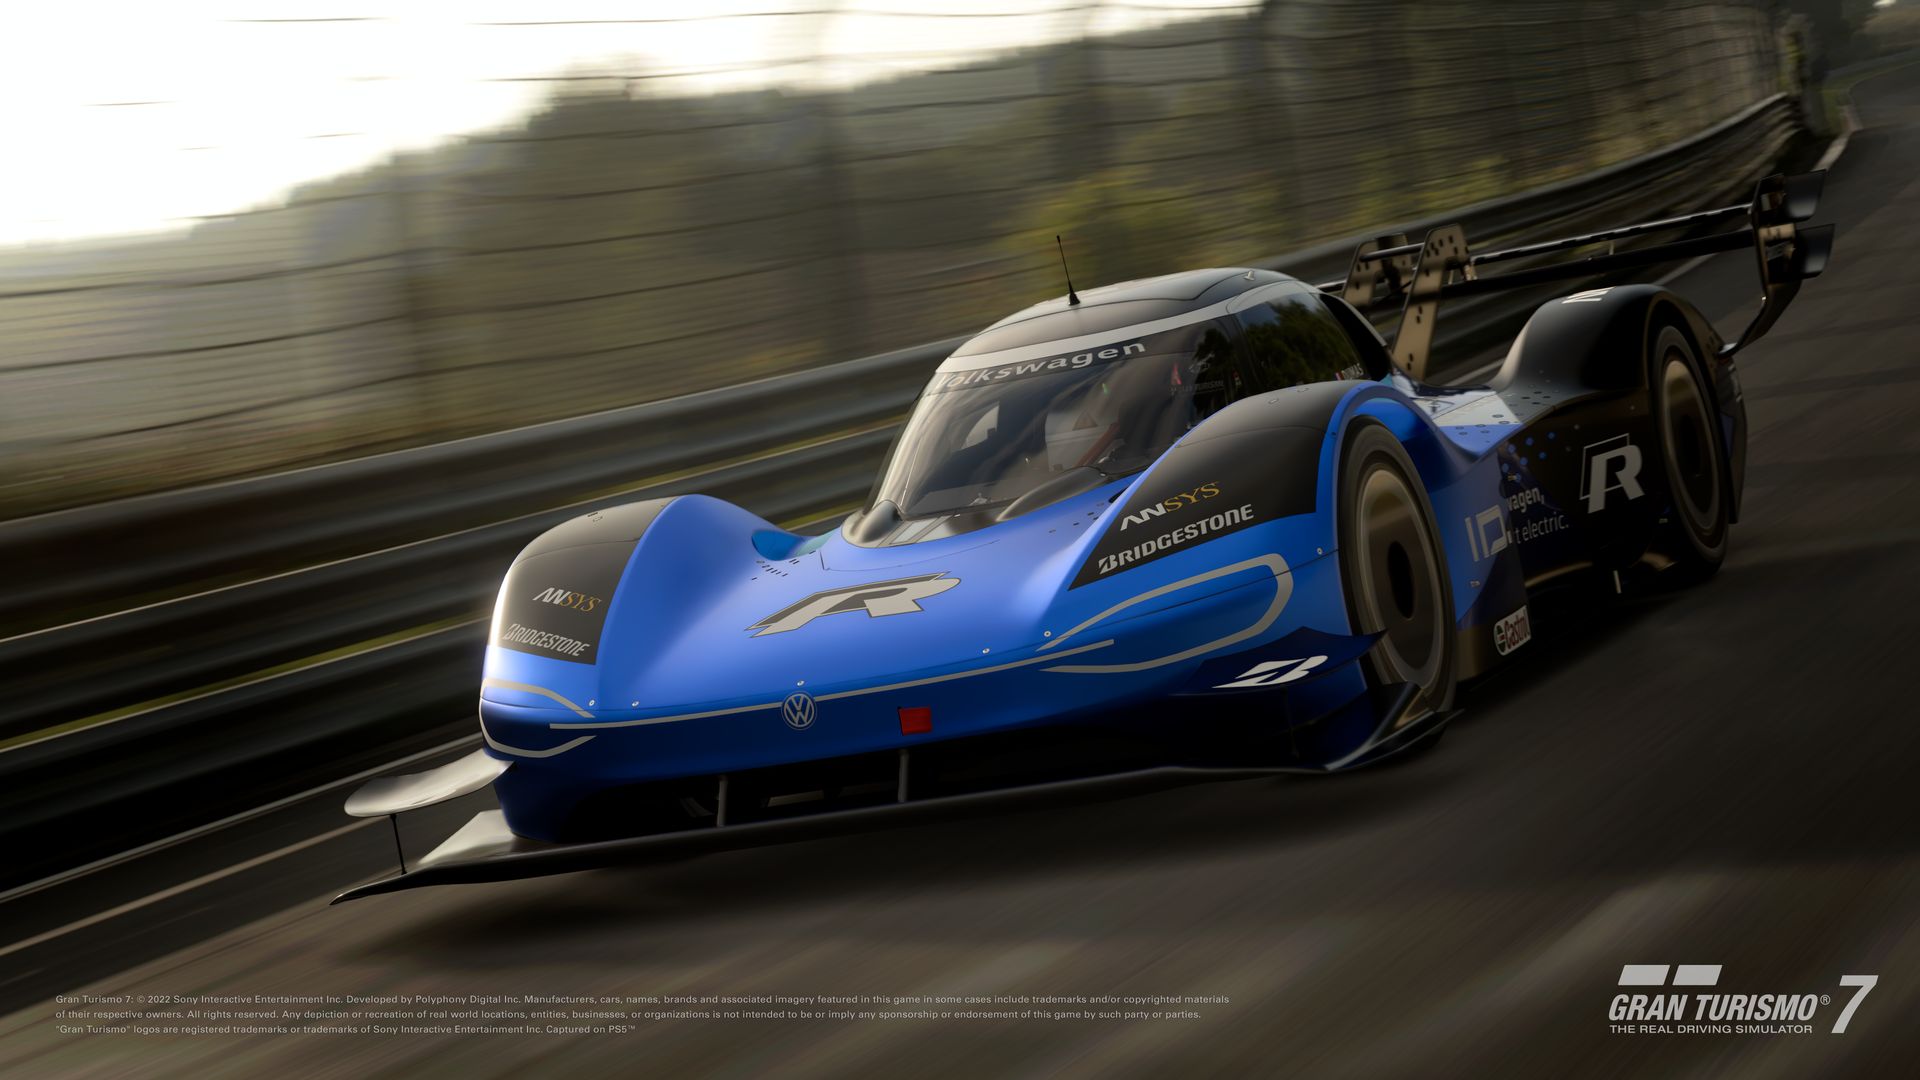 Gran Turismo 7, September 29th update teased